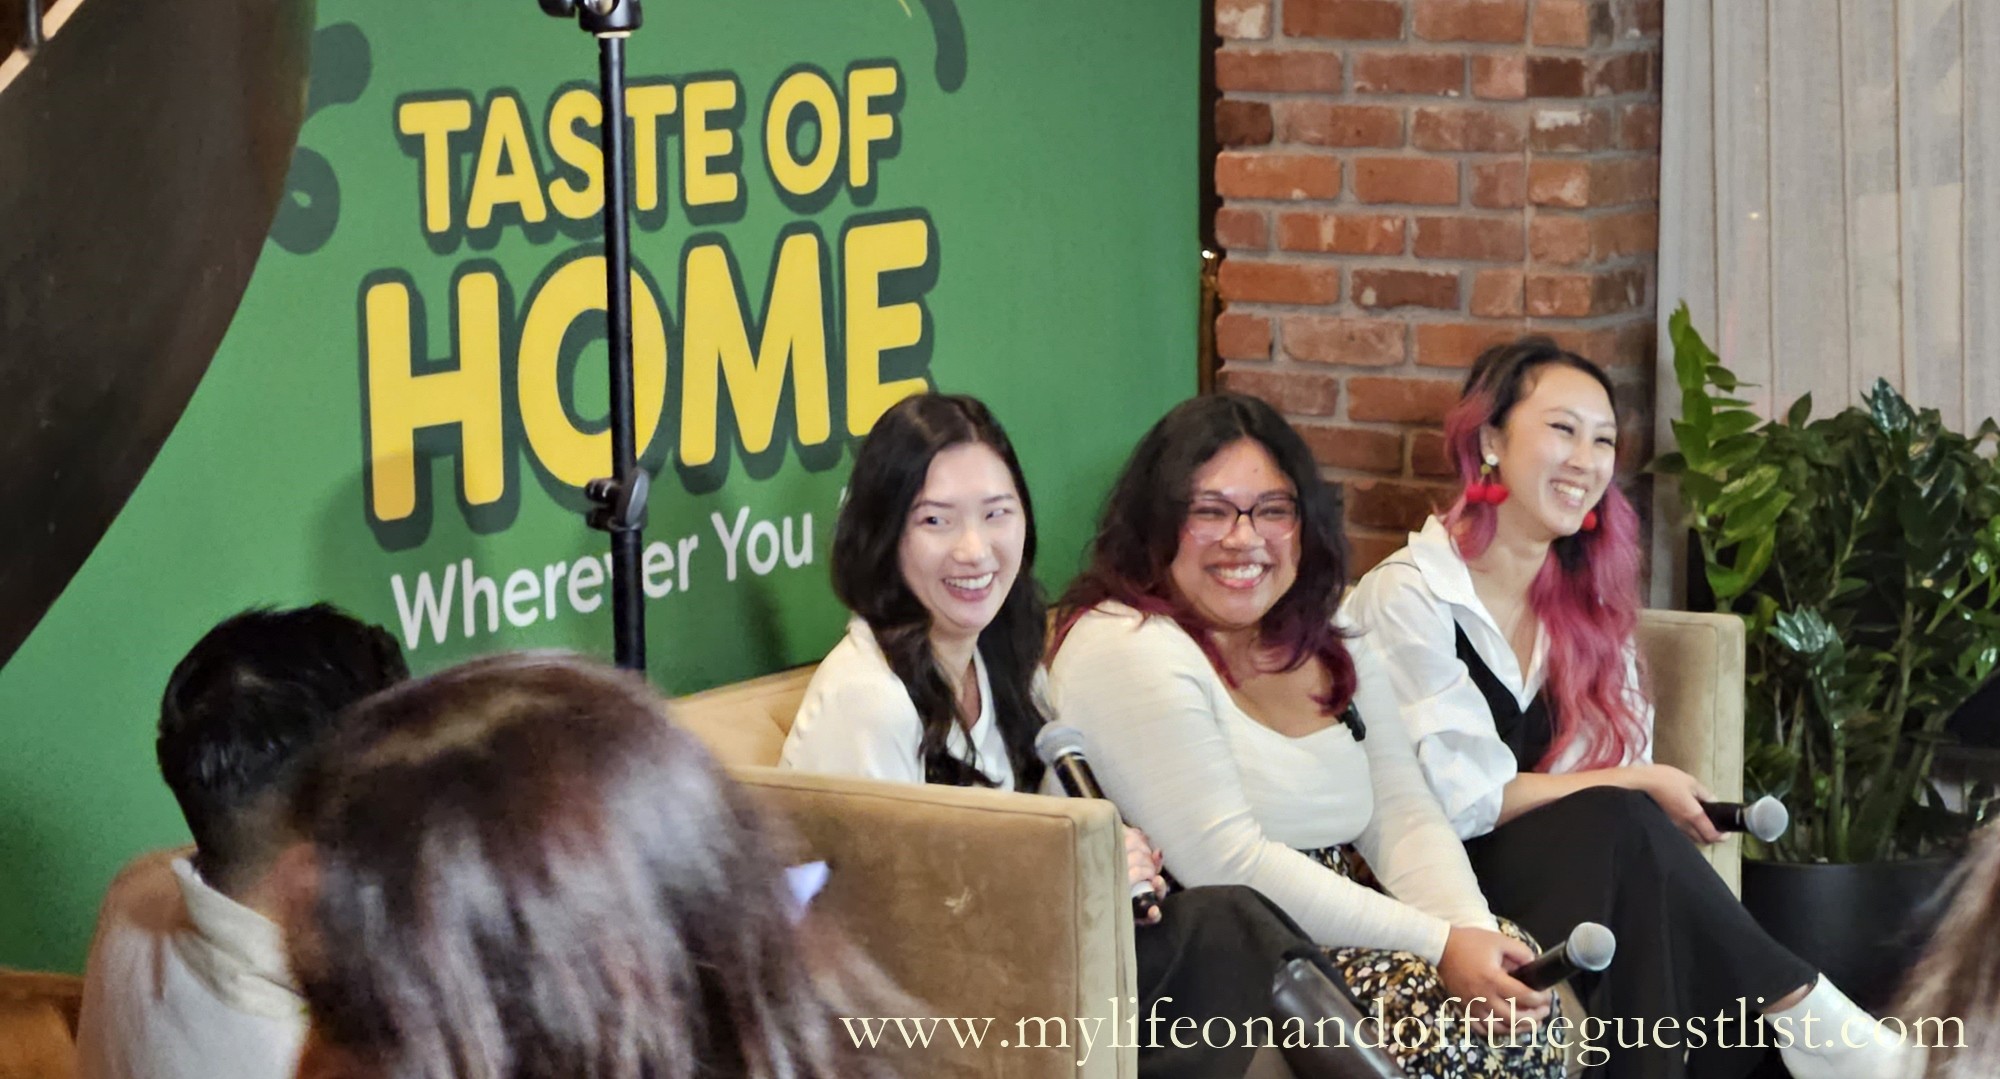 Knorr's “Taste of Home” Campaign Celebrates Cultural Cuisine